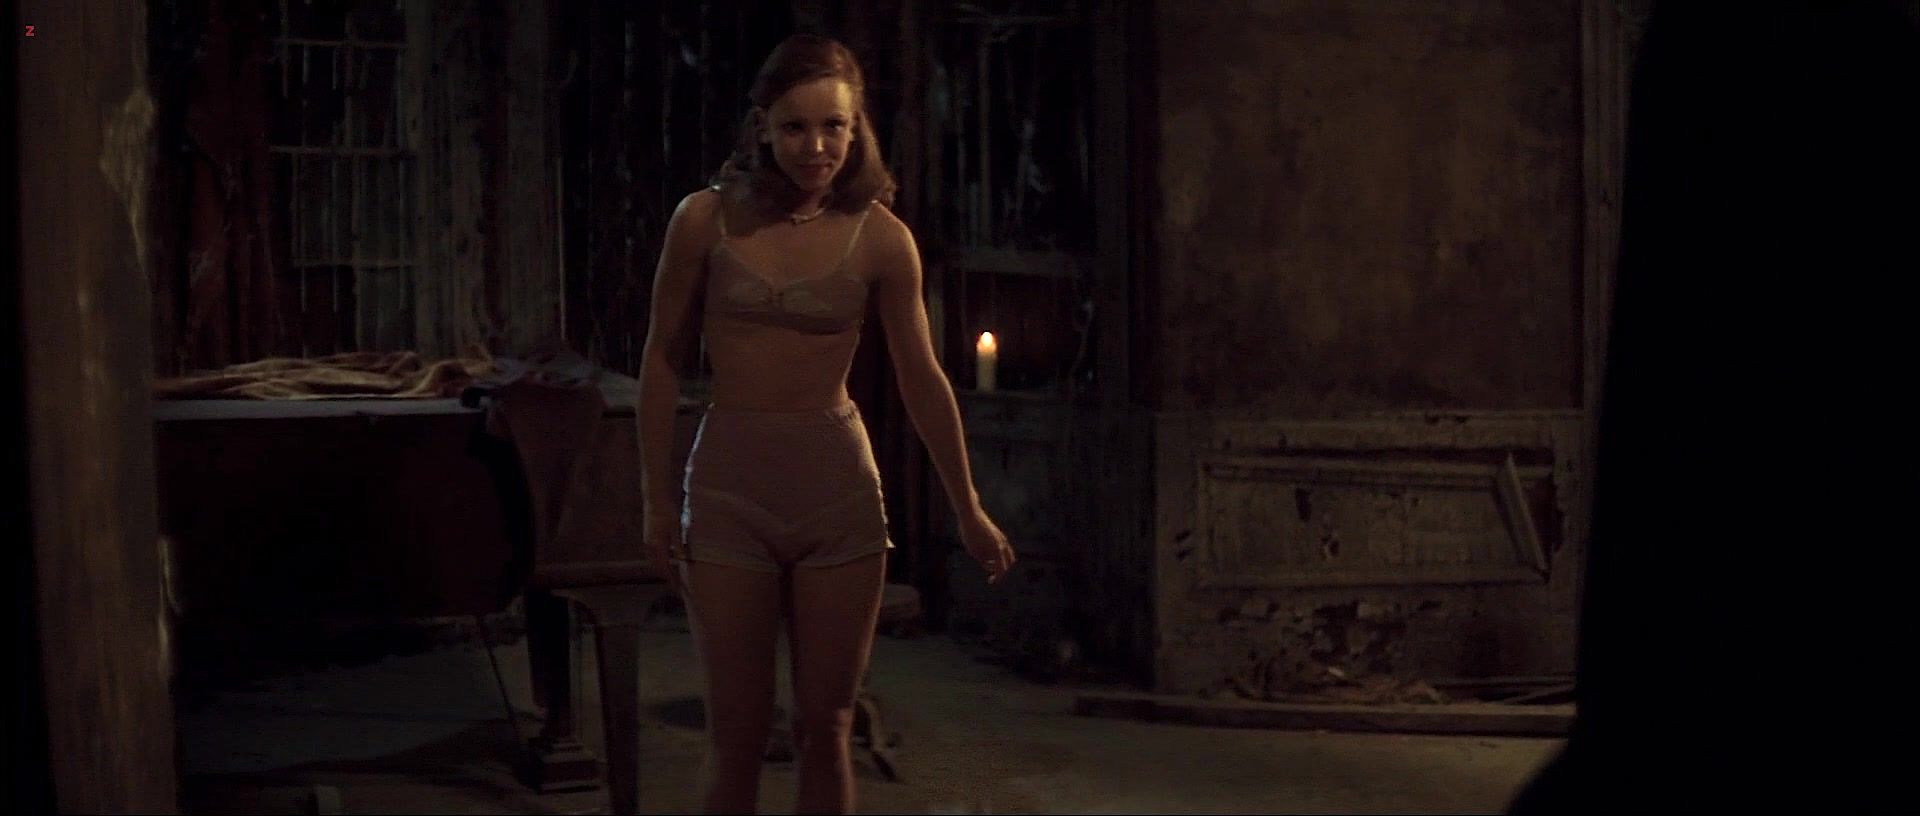 Bigbooty Topless actress Rachel McAdams nude - The Notebook (2004) Naughty - 2